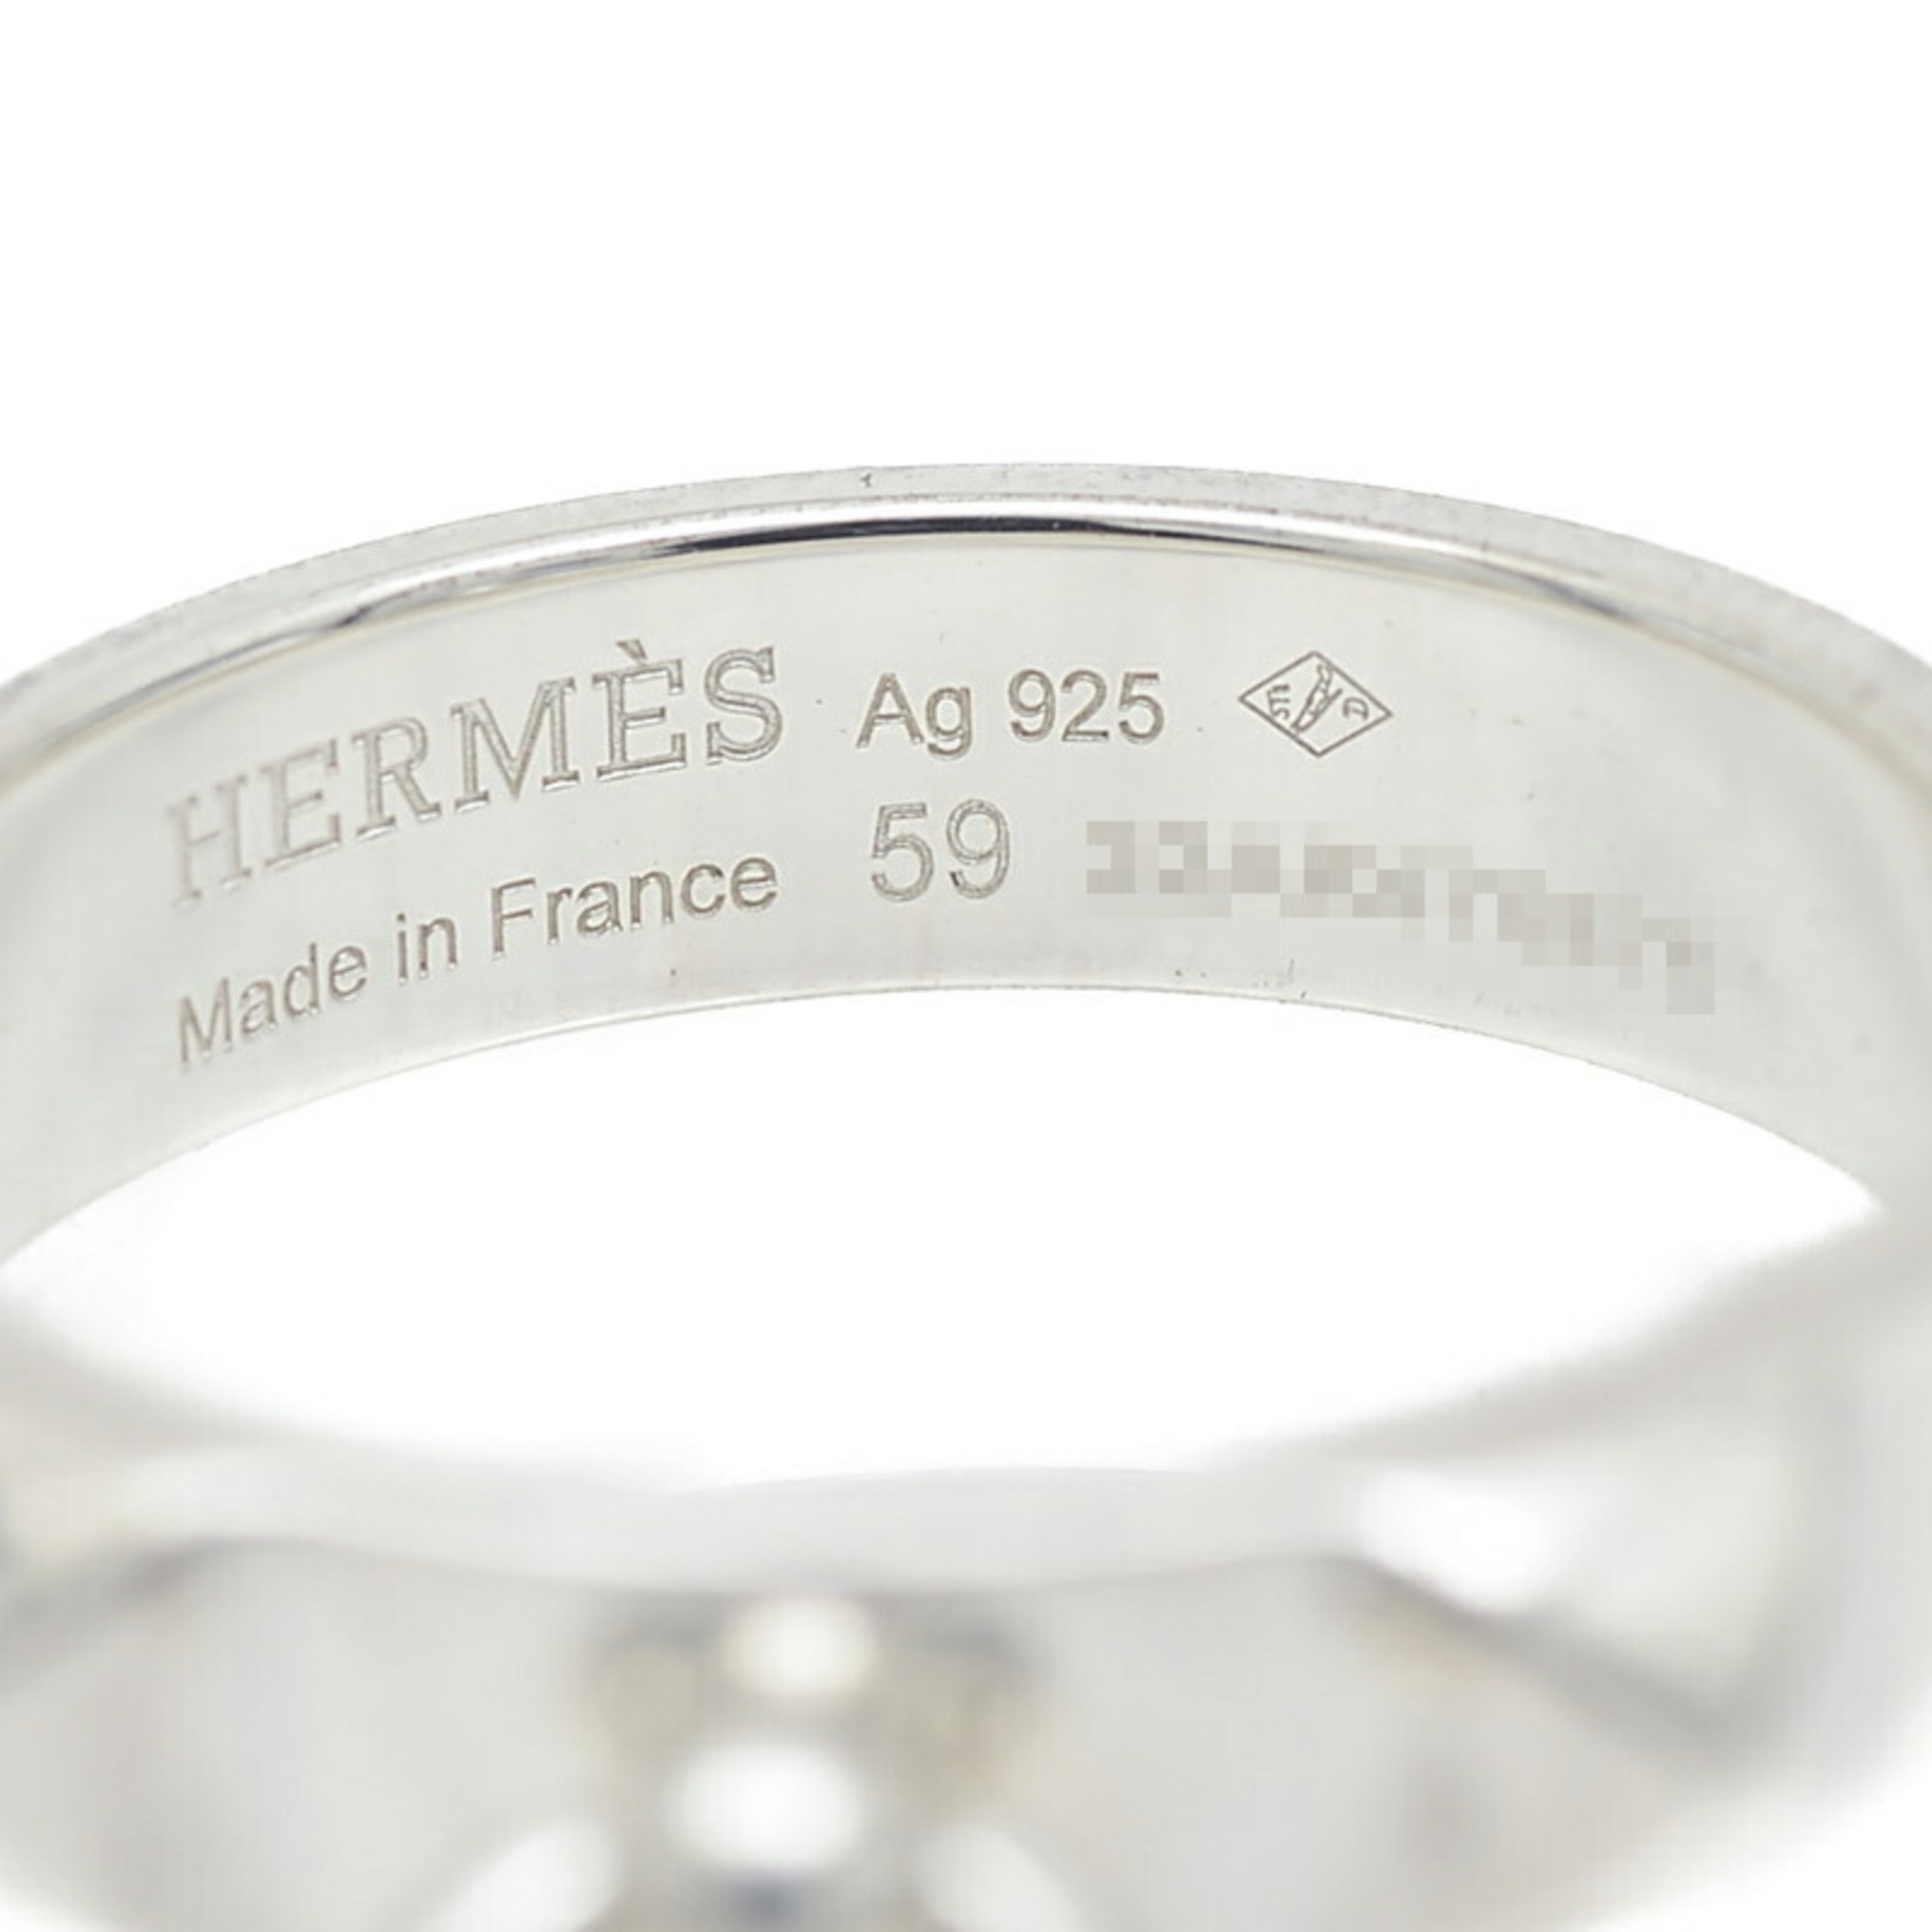 Hermes Collier de Chien Ring Silver SV925 #59